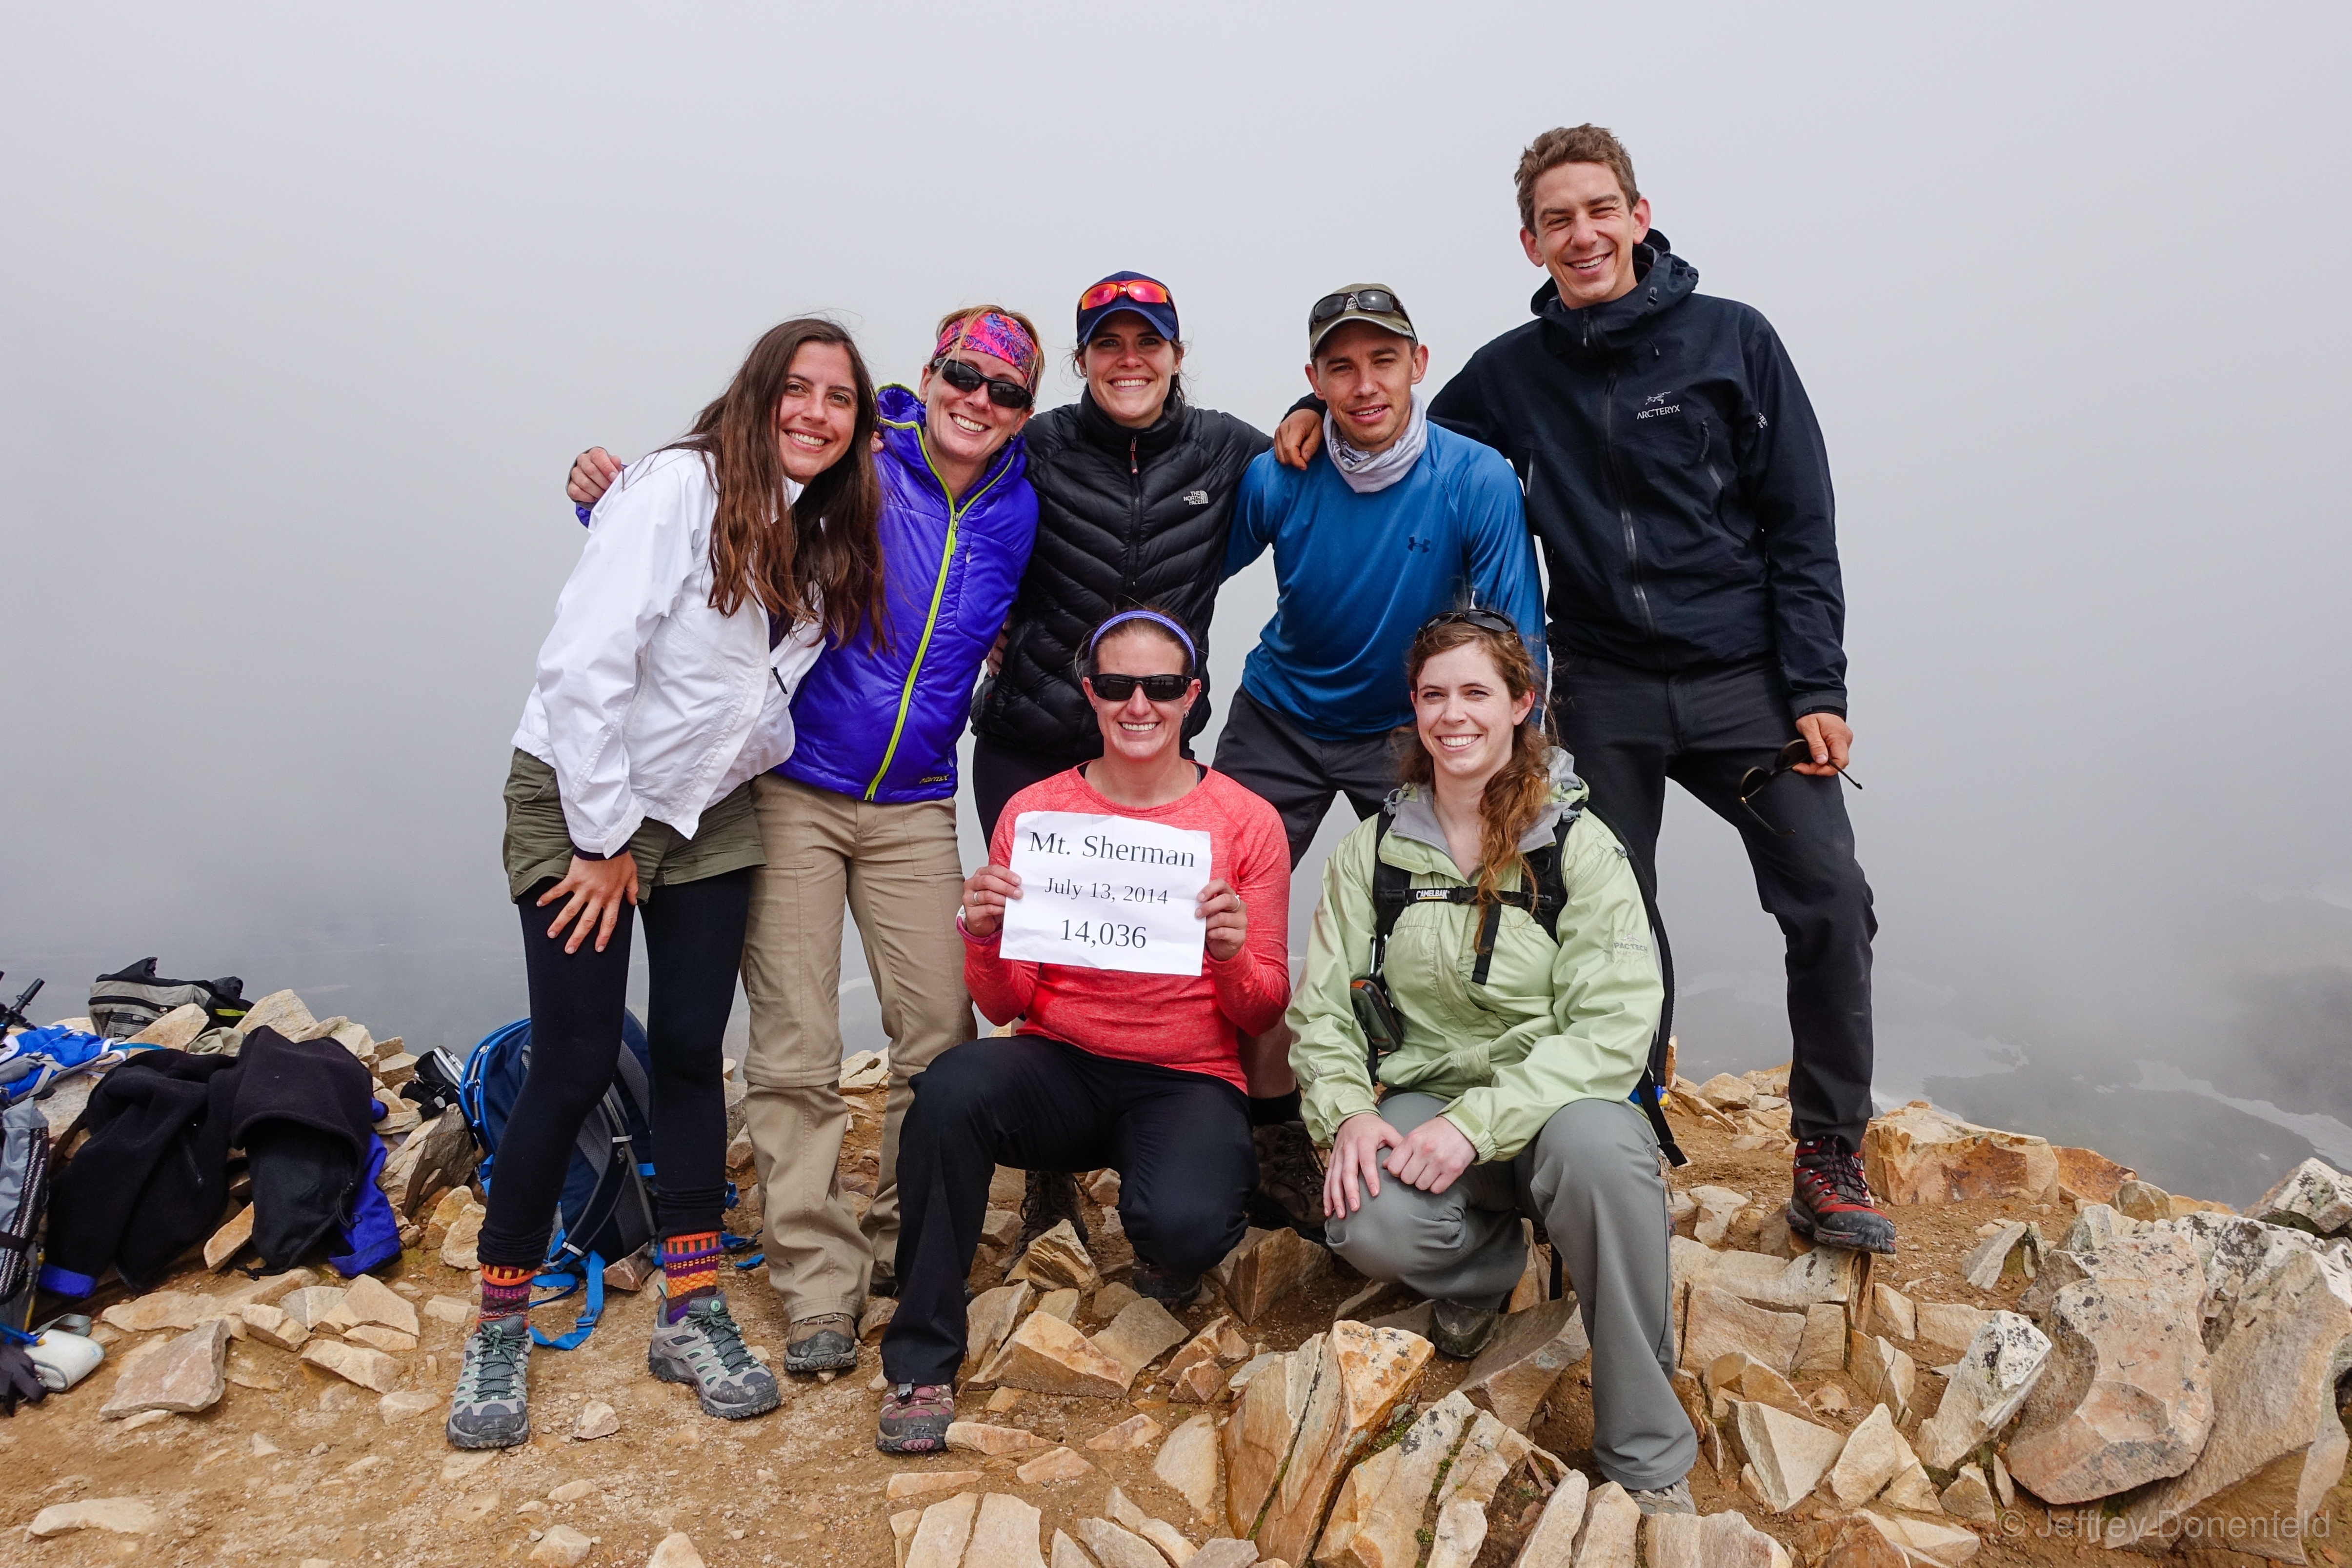 Climbing Mt. Sherman – 14,035 Feet